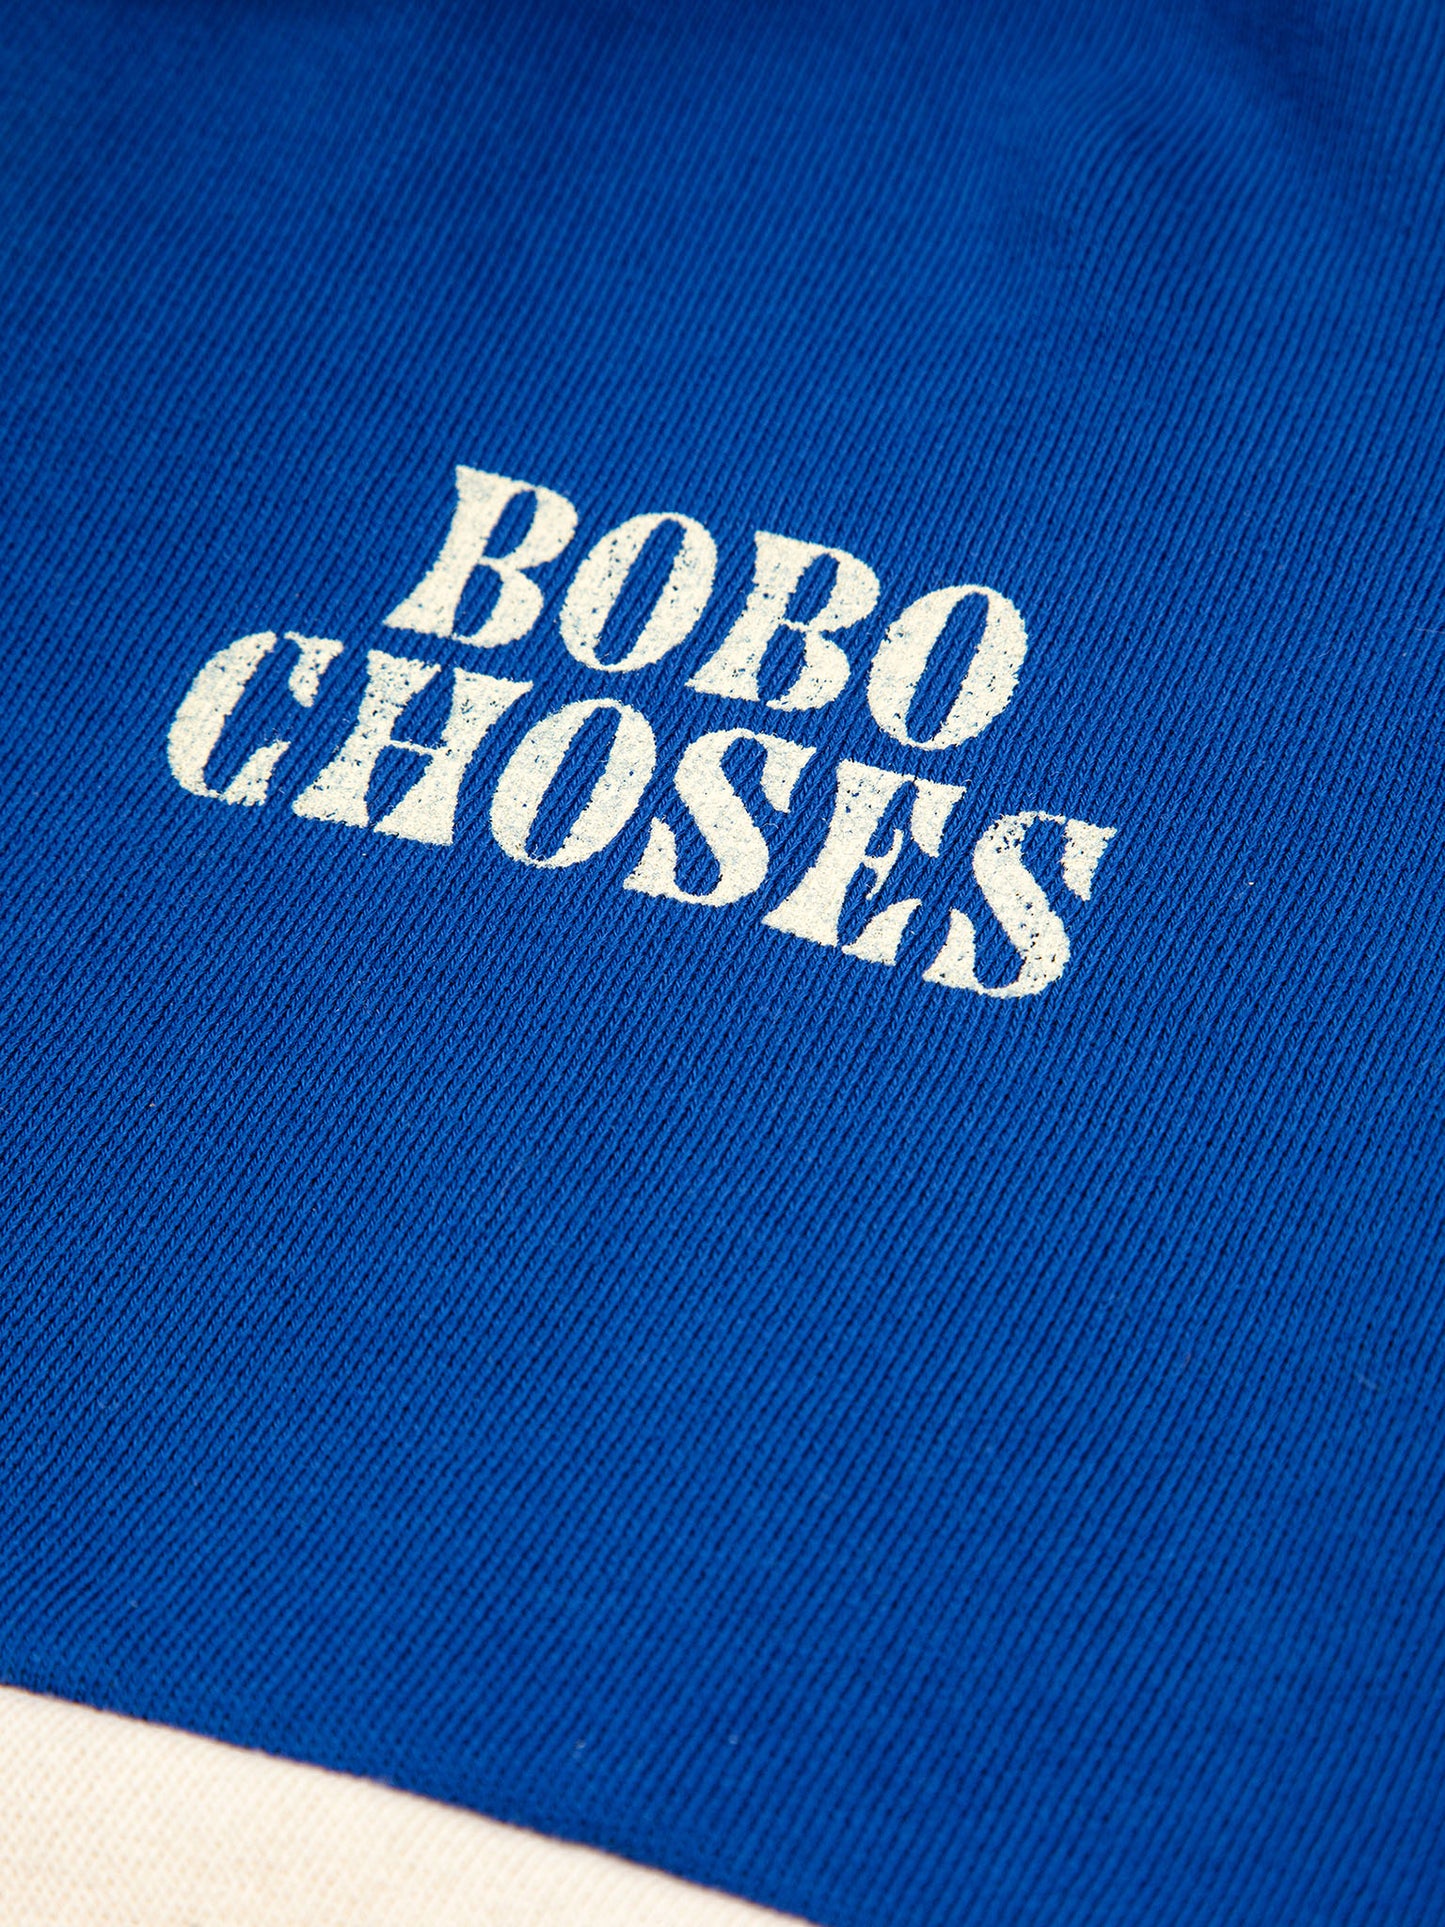 Bobo Choses hooded sweatshirt